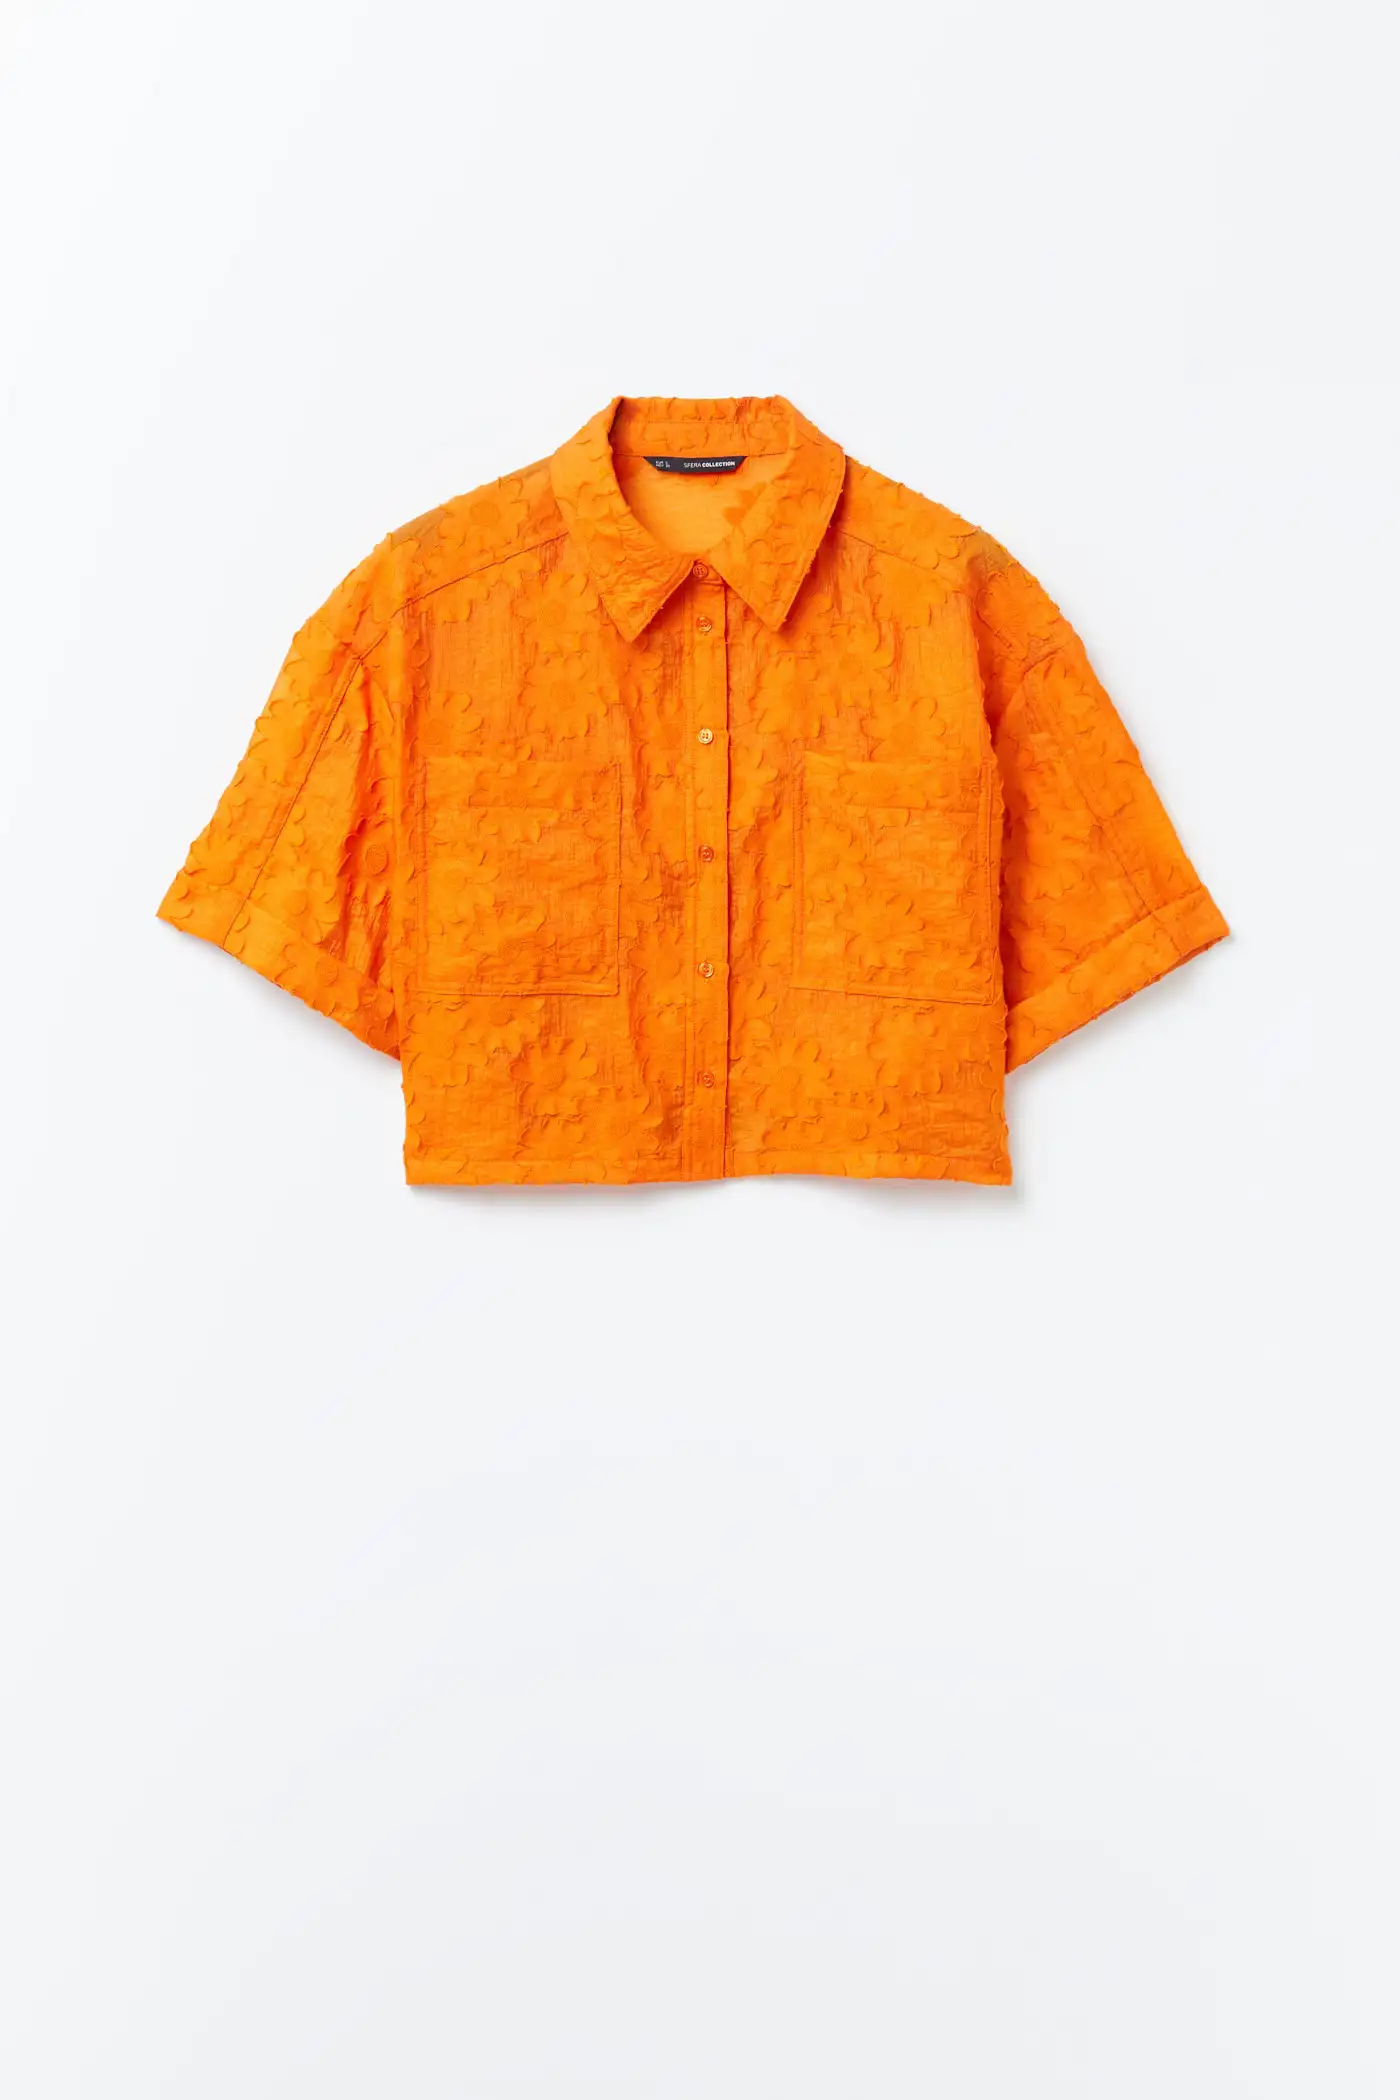 Camiseta crop de color naranja